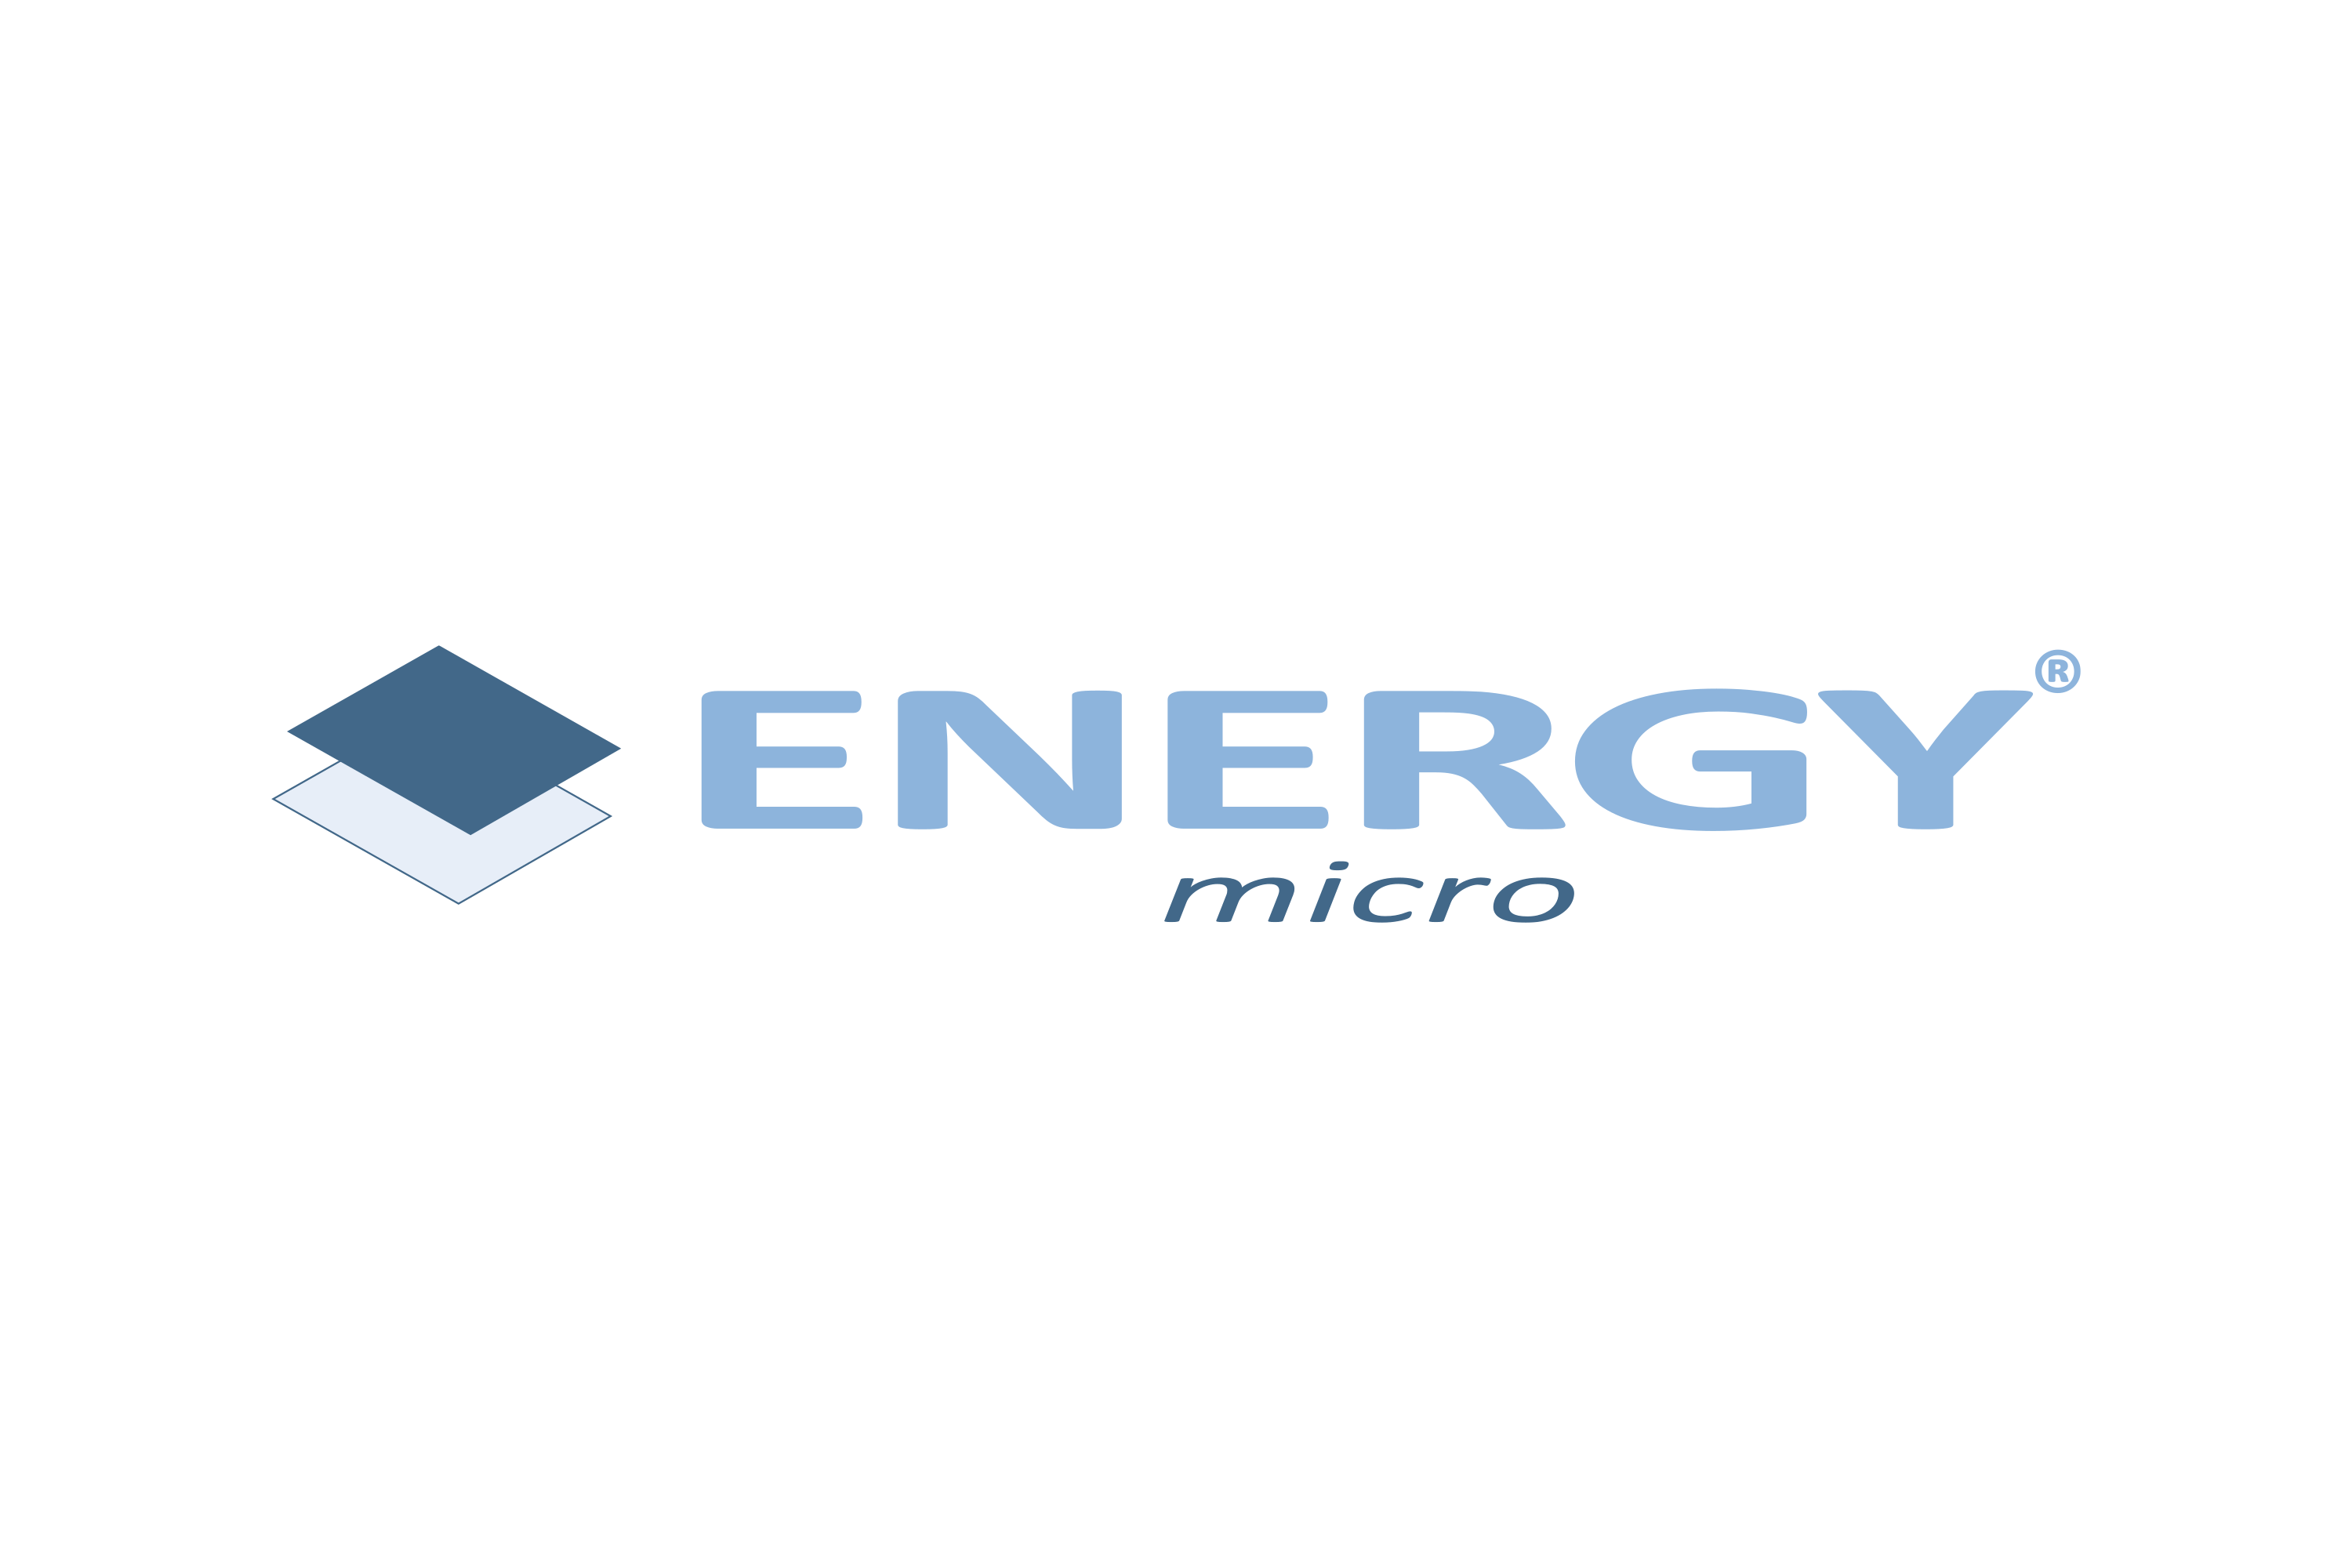 Energy Micro Logo